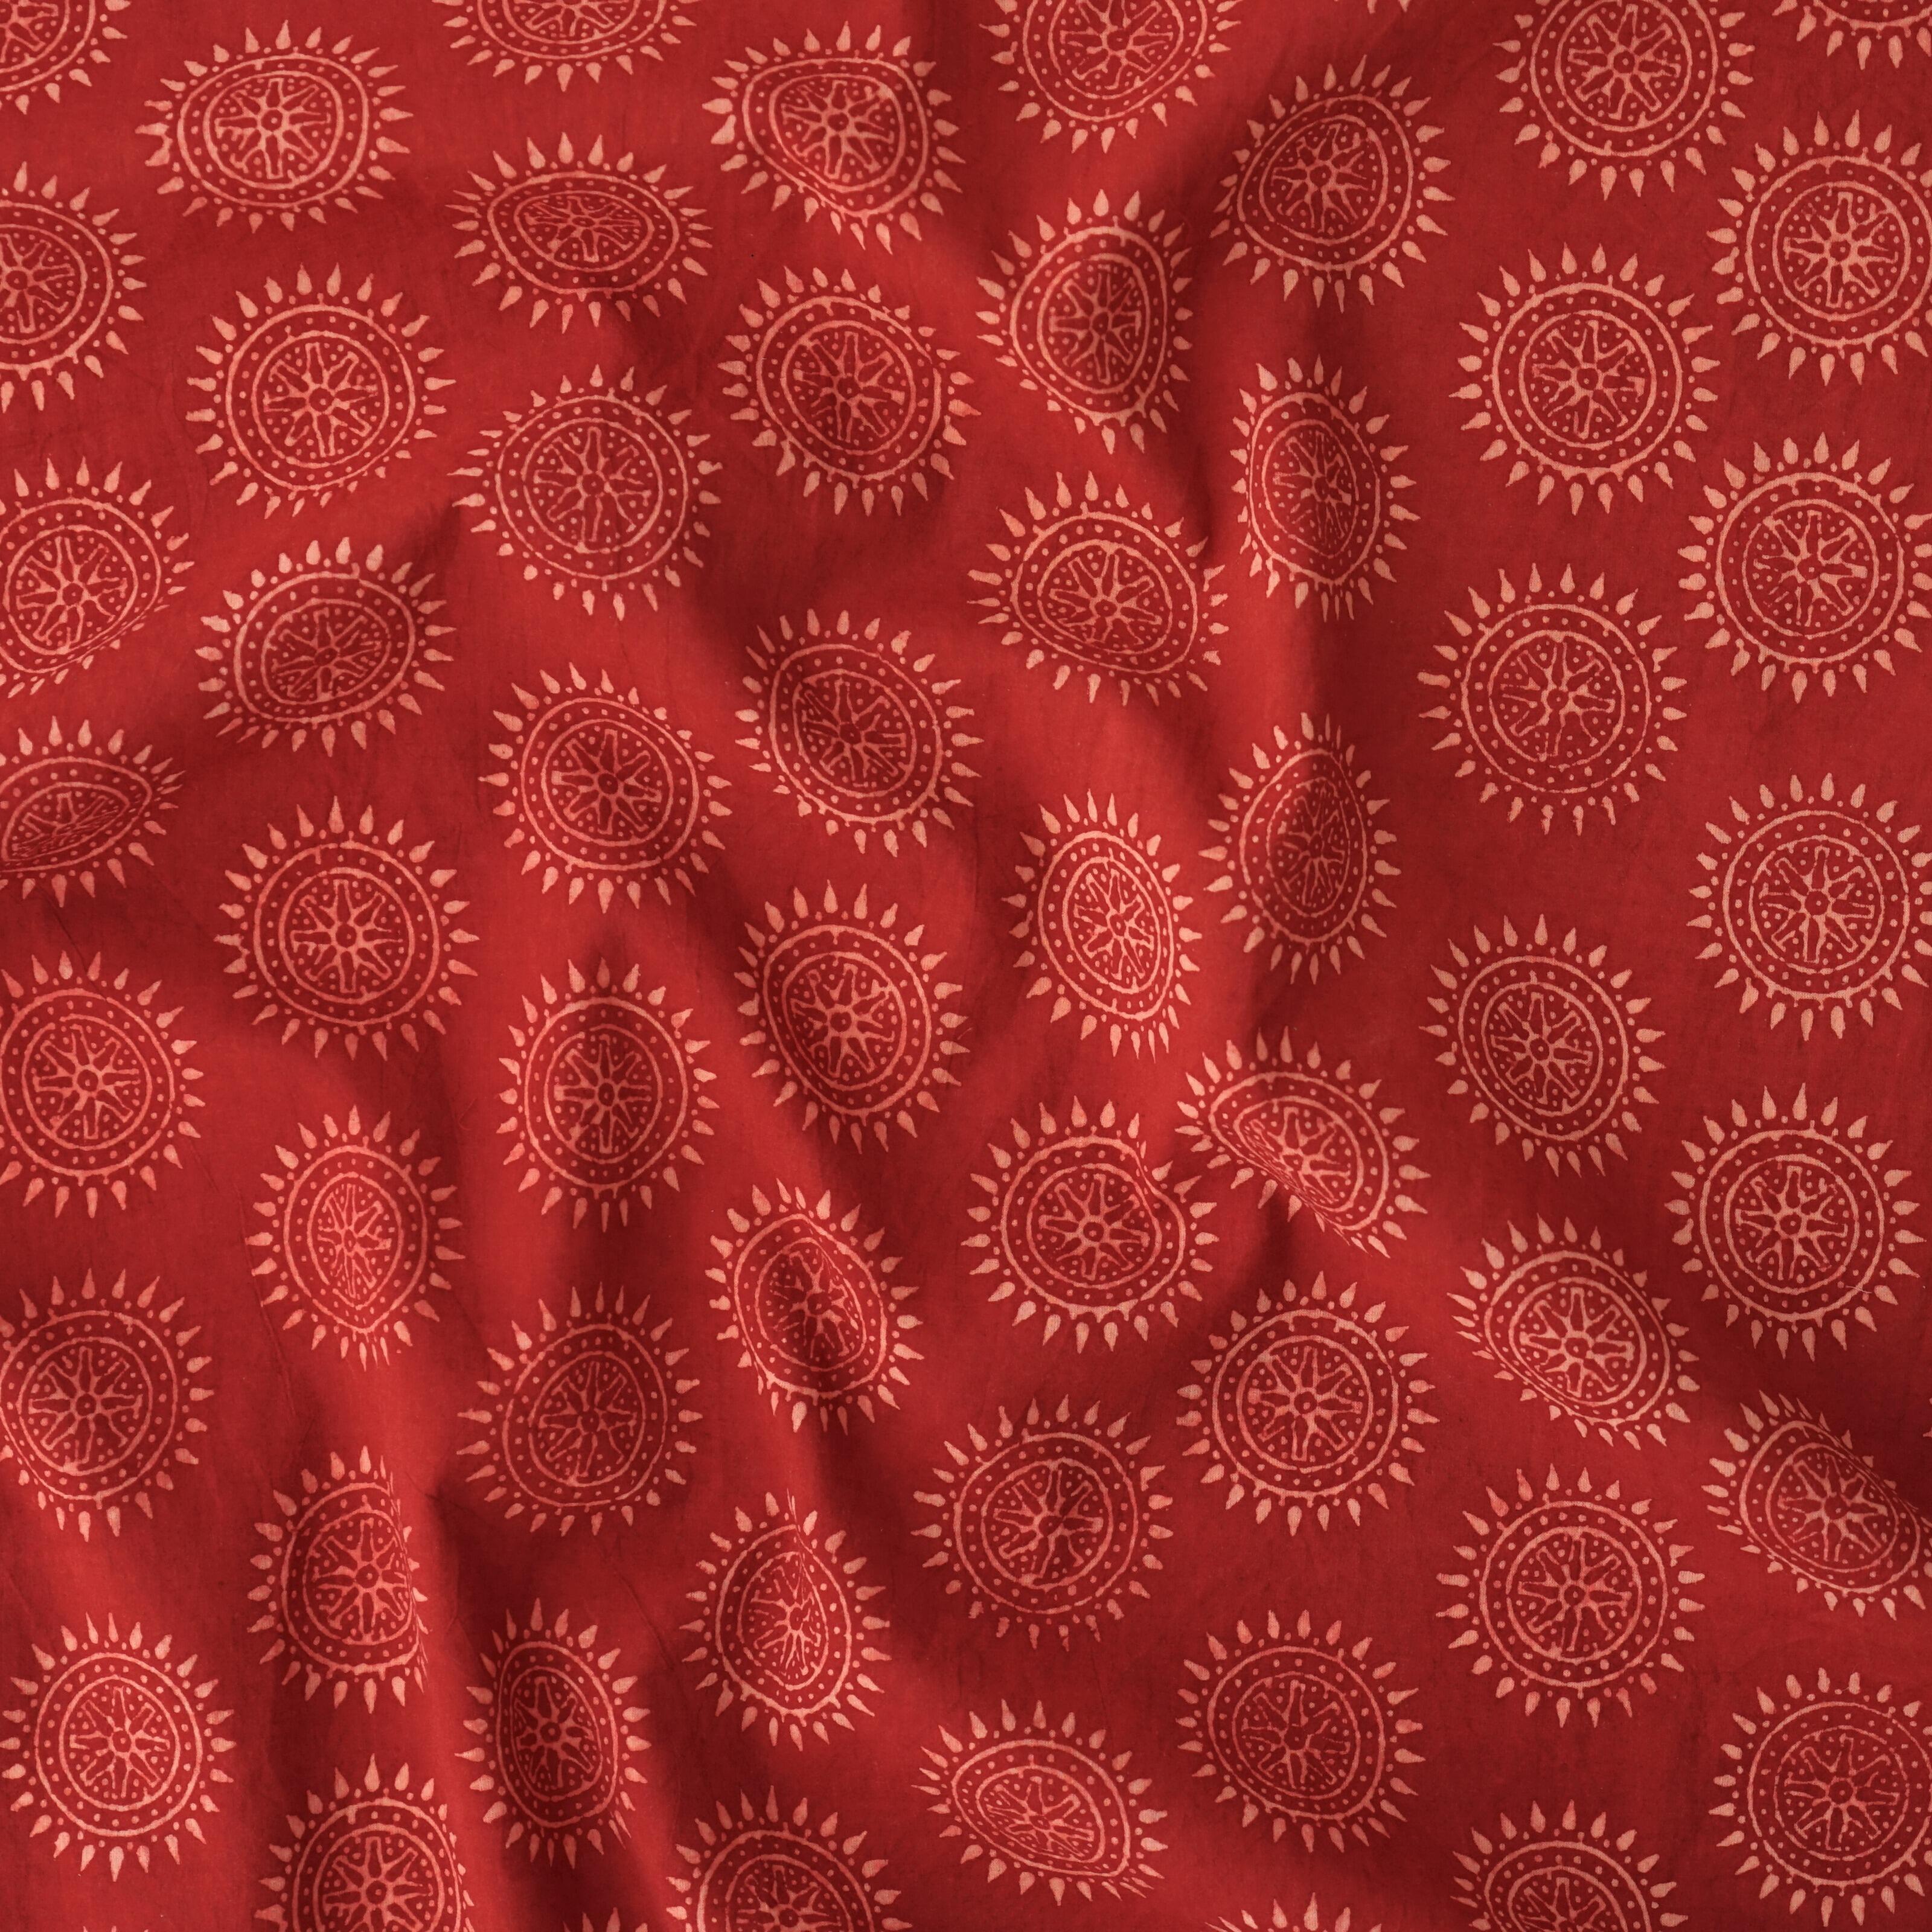 1 - AHM52 - Block-Printed Cotton Fabric - Alizarin Dye - Red - Troubadour Design - Contrast